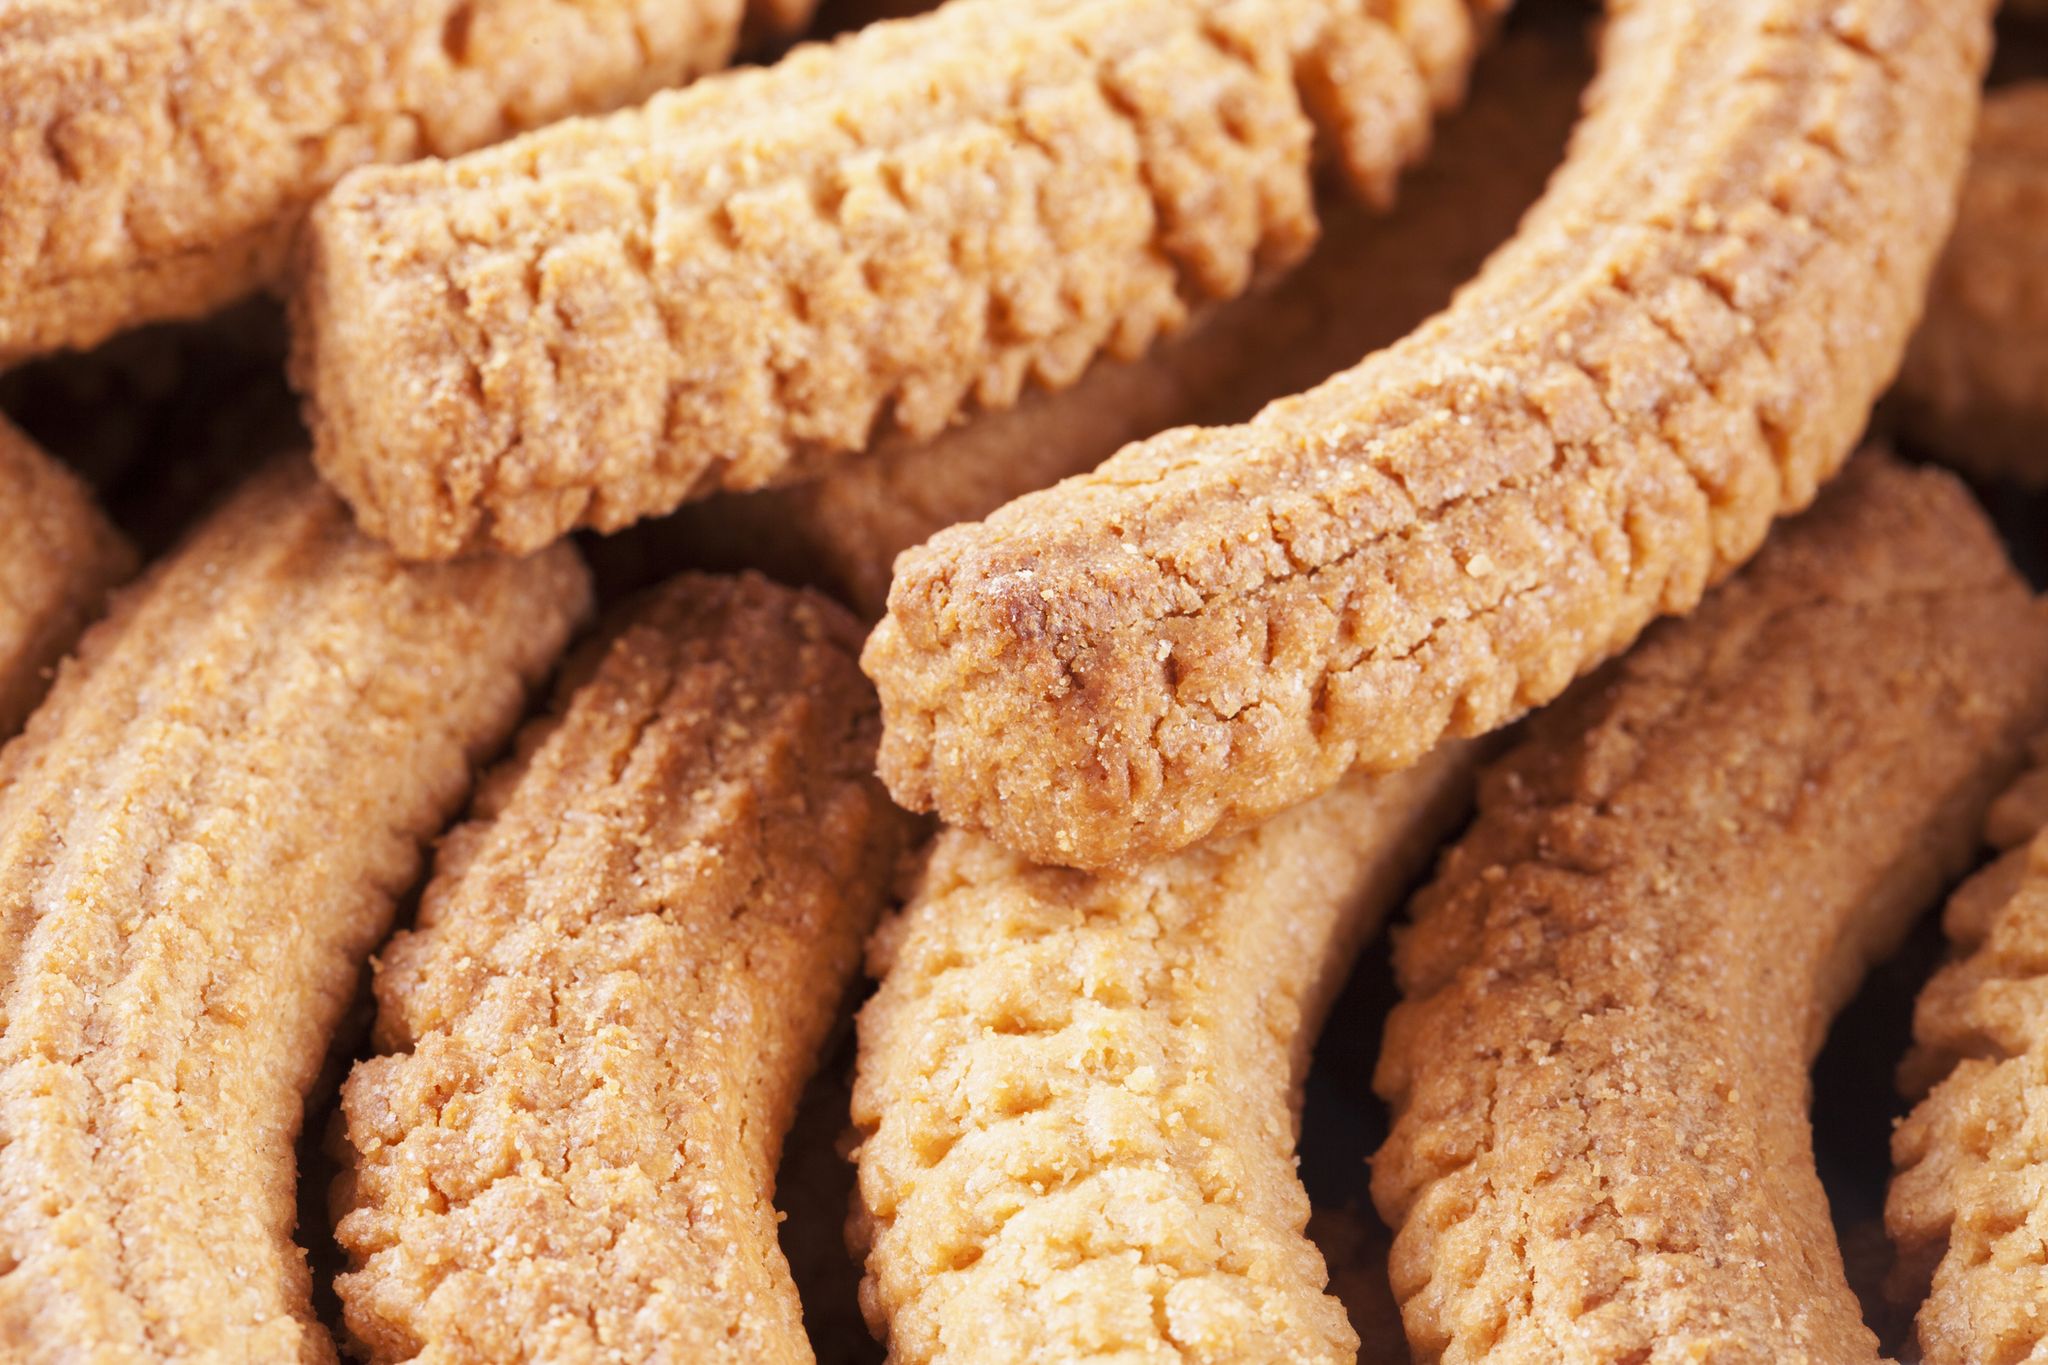 krumiri biscuits in close up, horizontal image